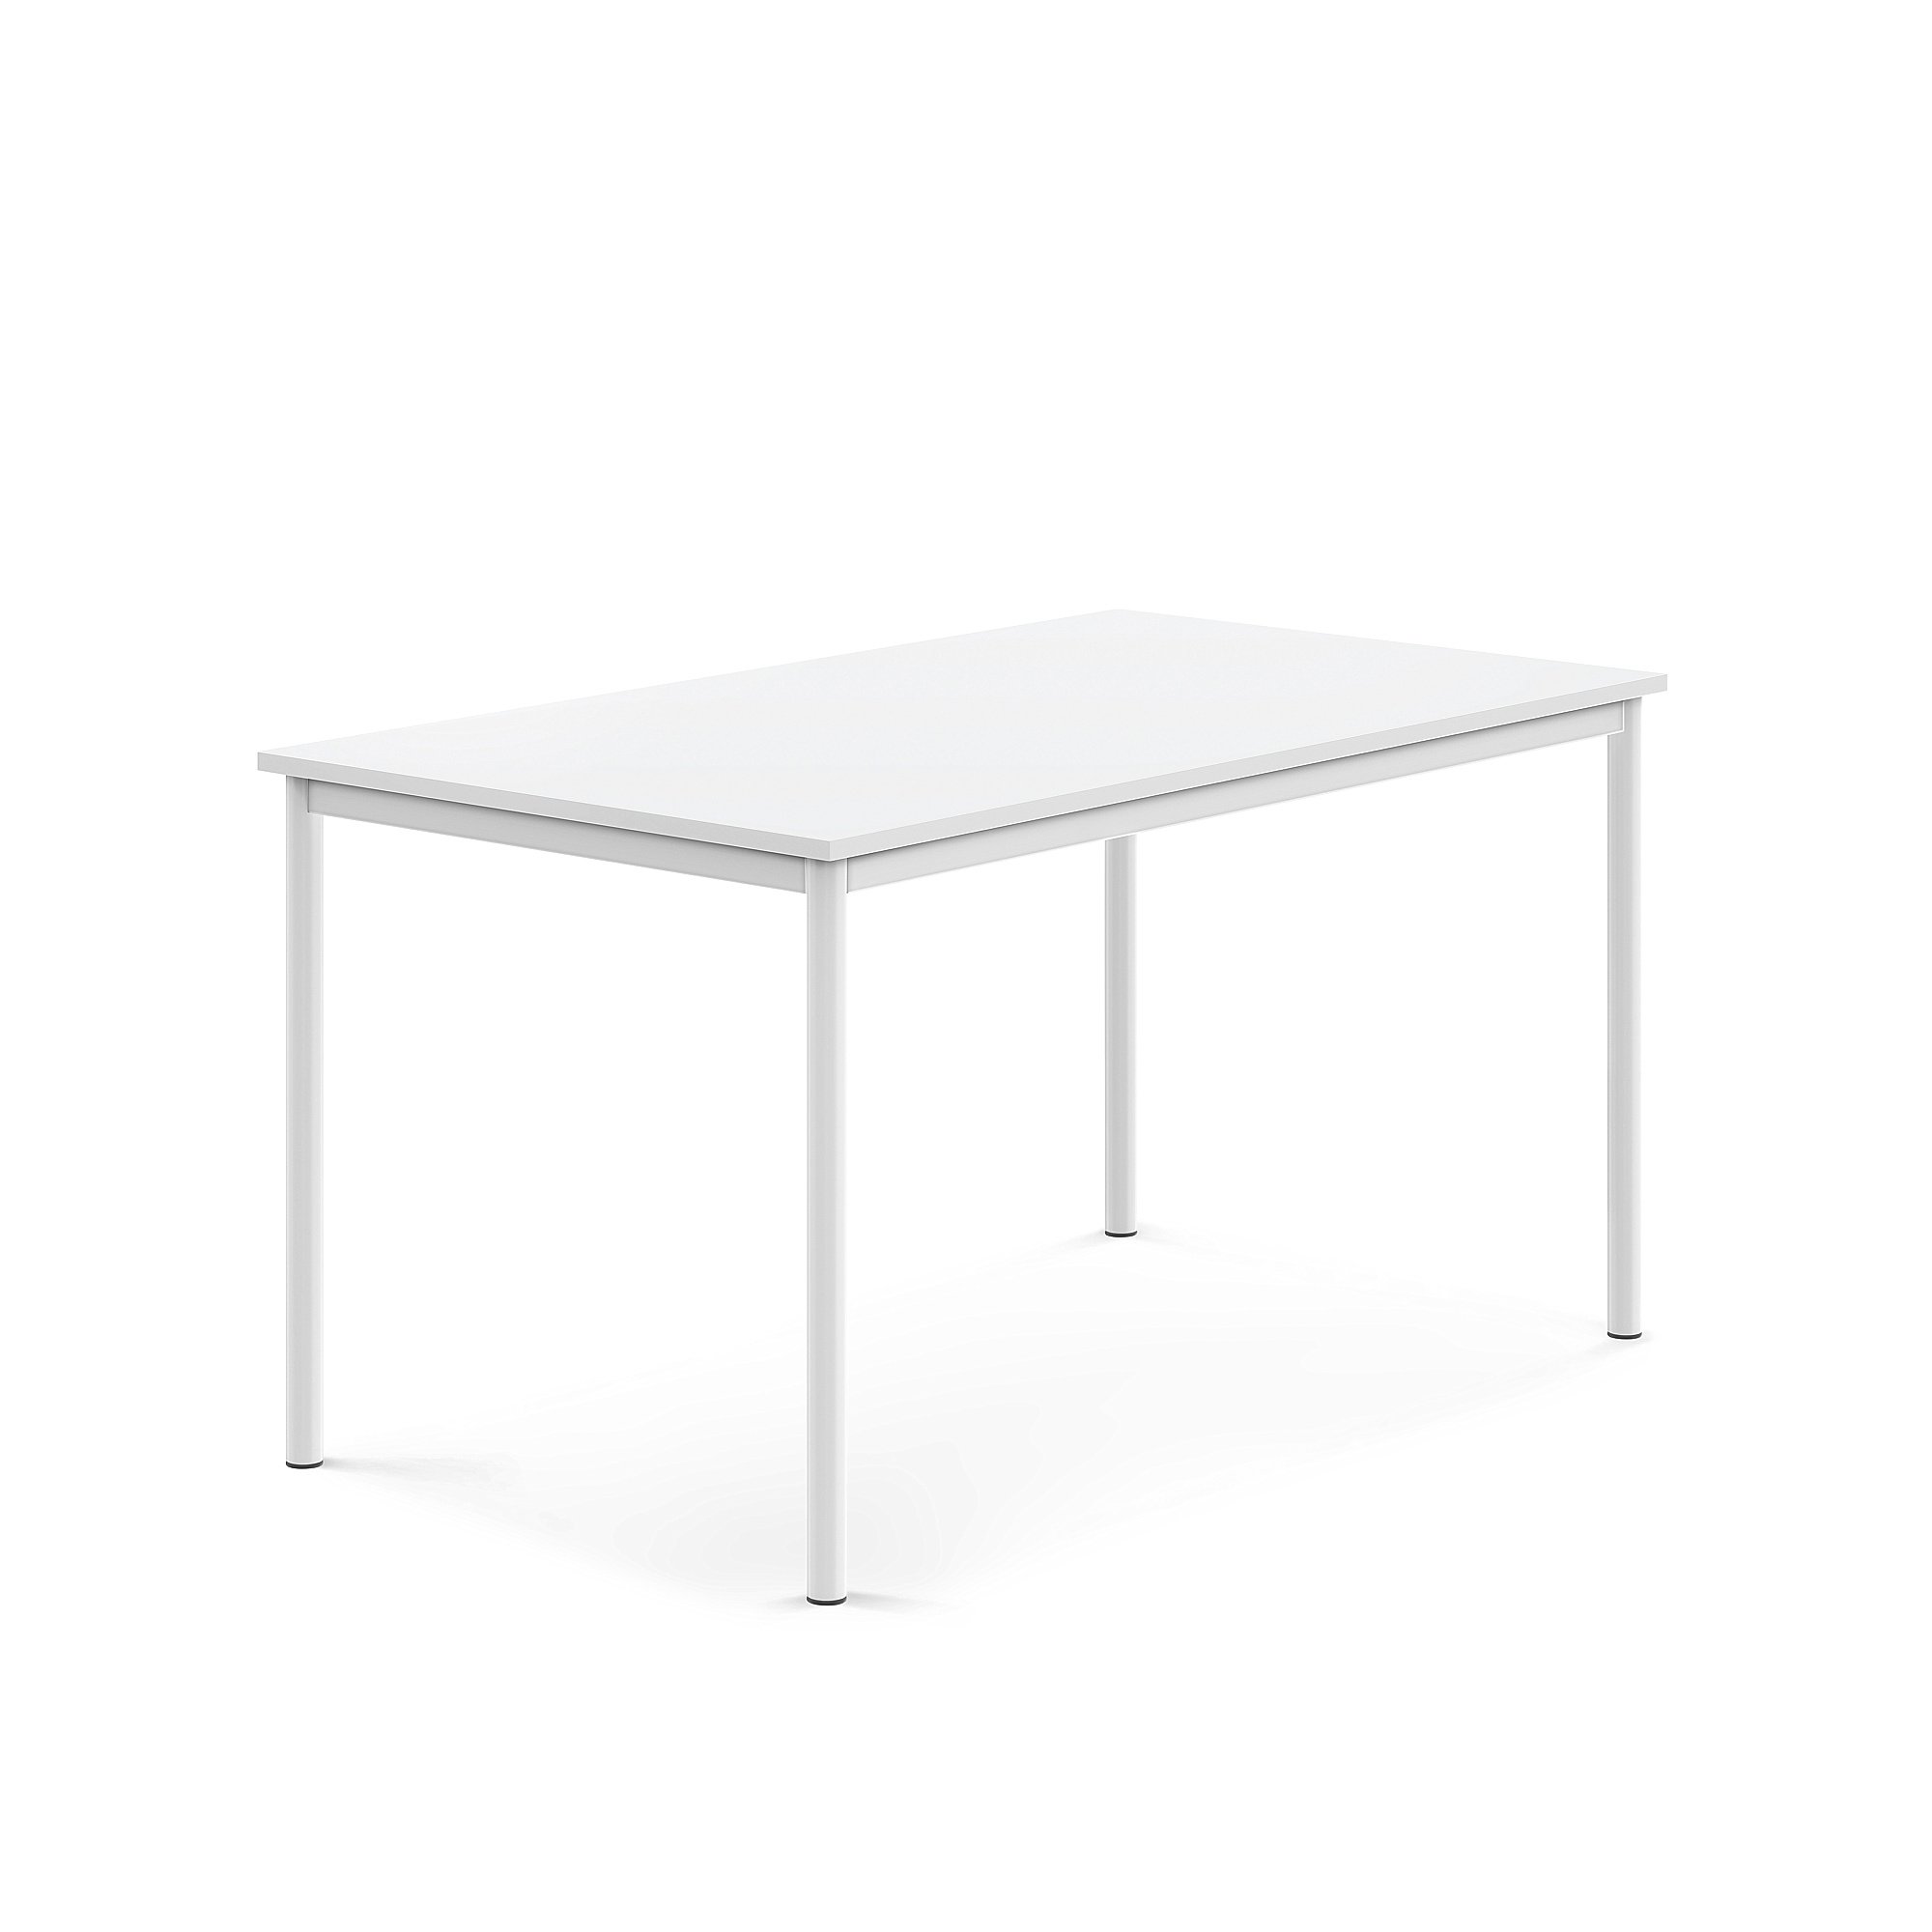 Stůl SONITUS, 1400x800x720 mm, bílé nohy, HPL deska tlumící hluk, bílá